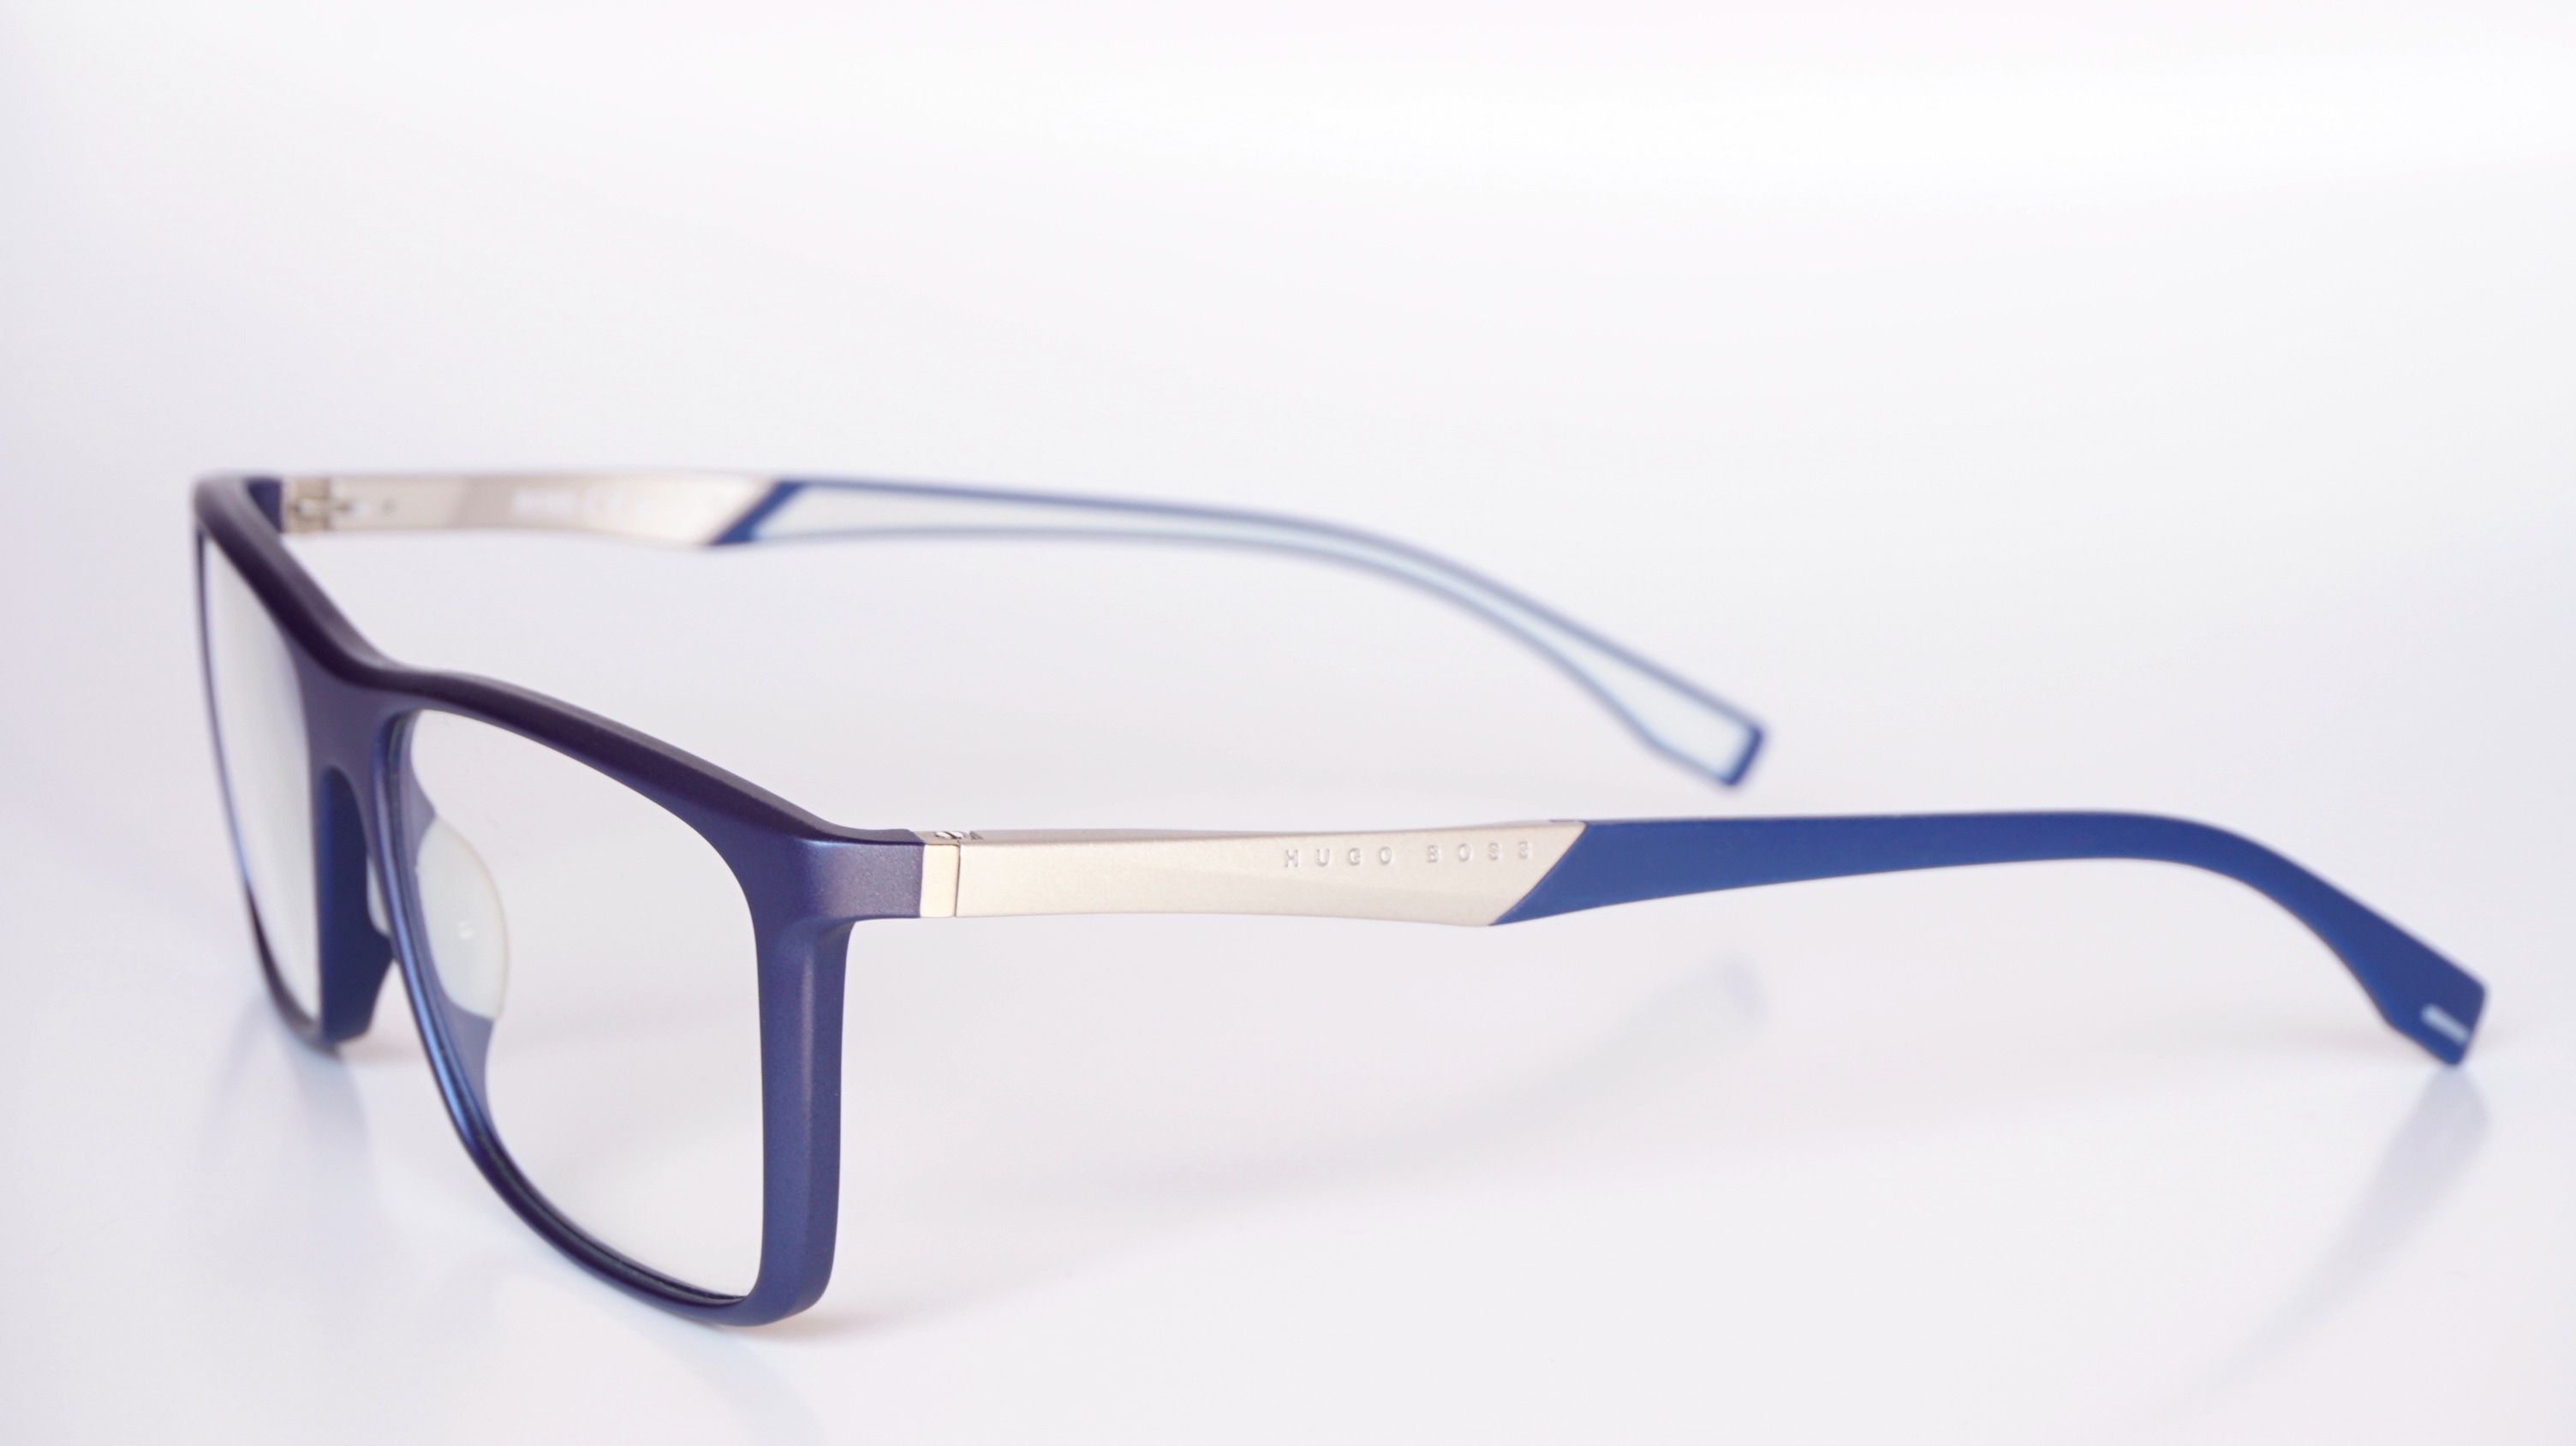 grey and blue frame eyeglasses